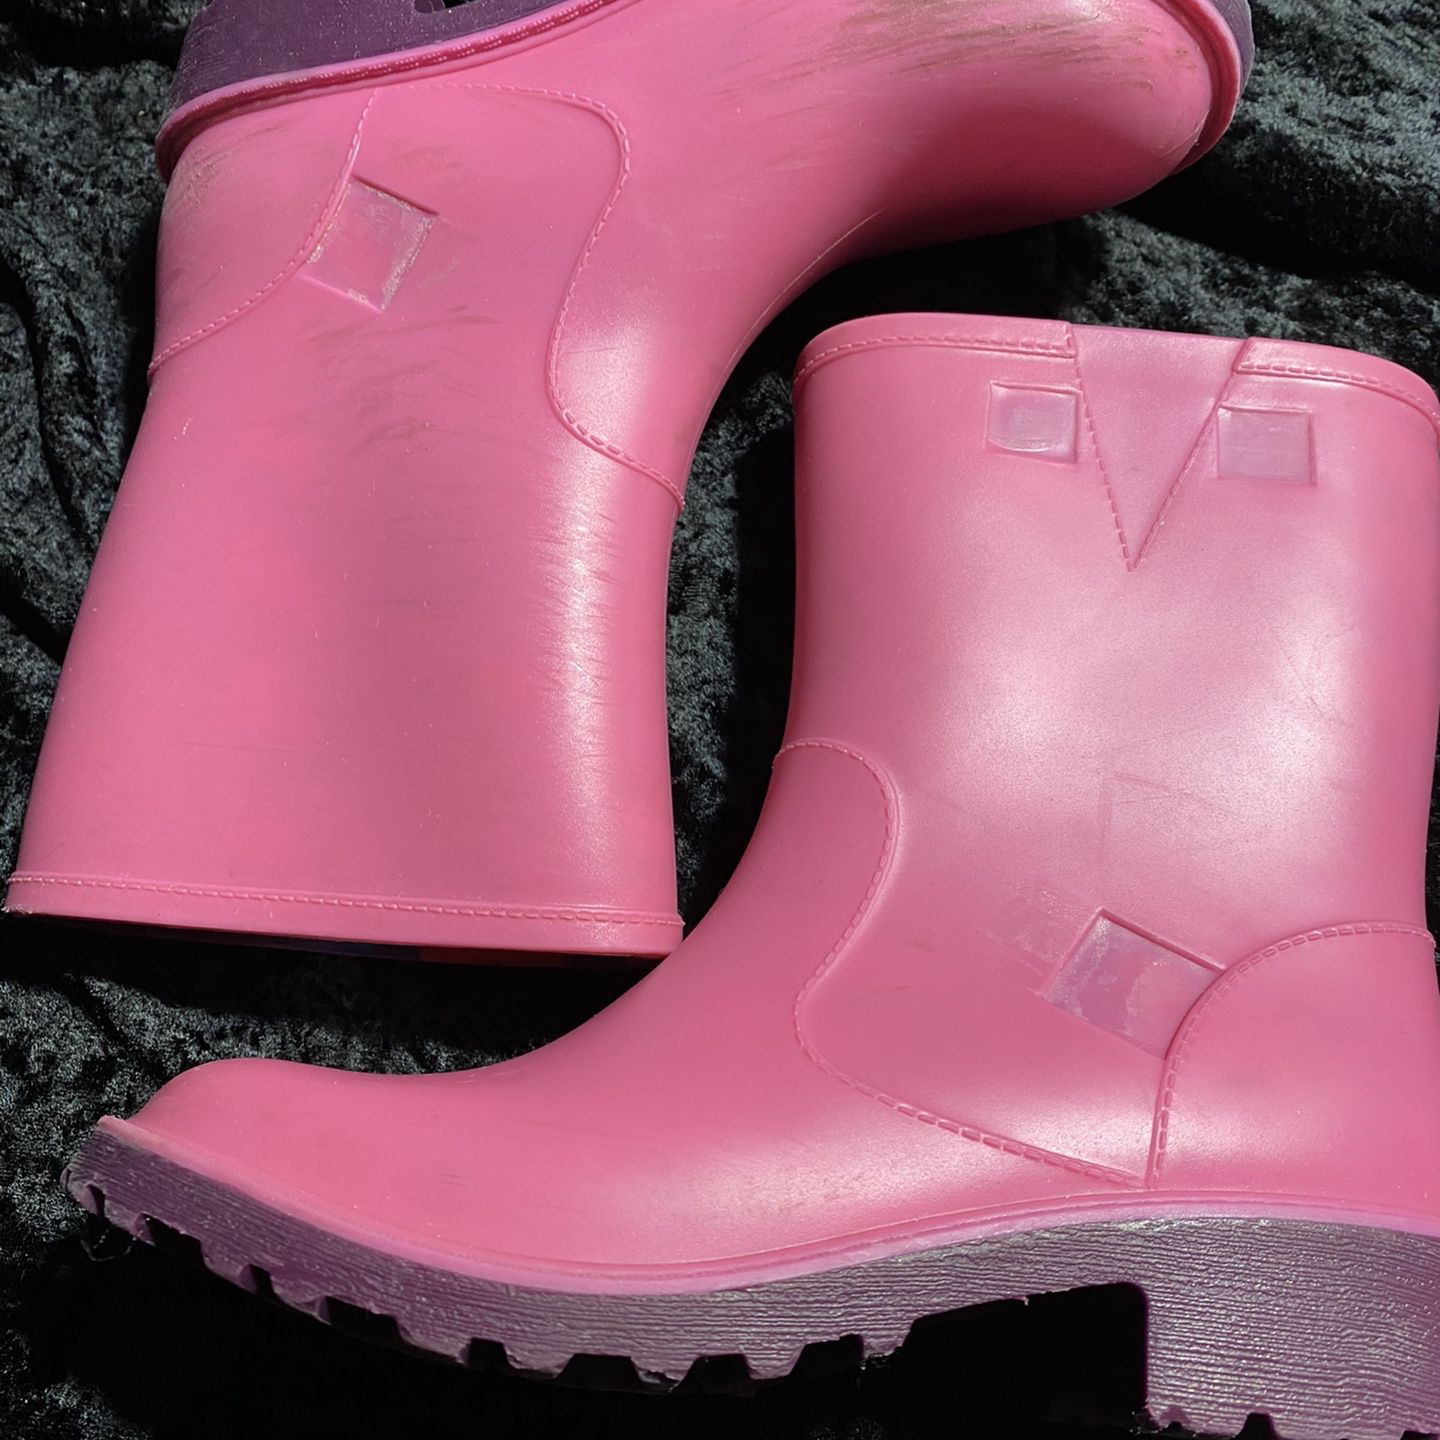 Girls Size 2 Skechers Rain boots